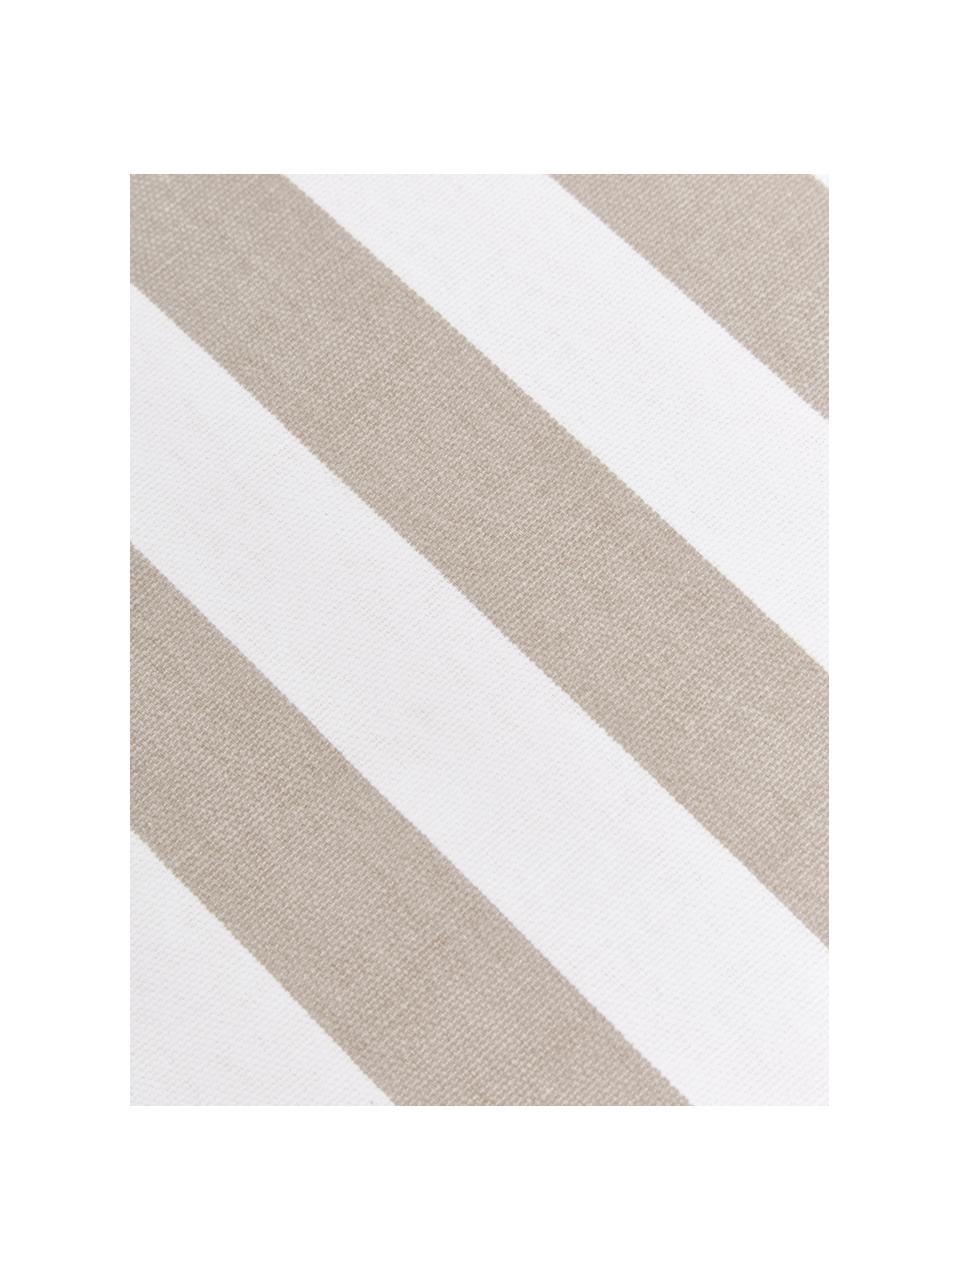 Coussin de chaise épais rayures taupe Timon, Taupe, blanc, larg. 40 x long. 40 cm